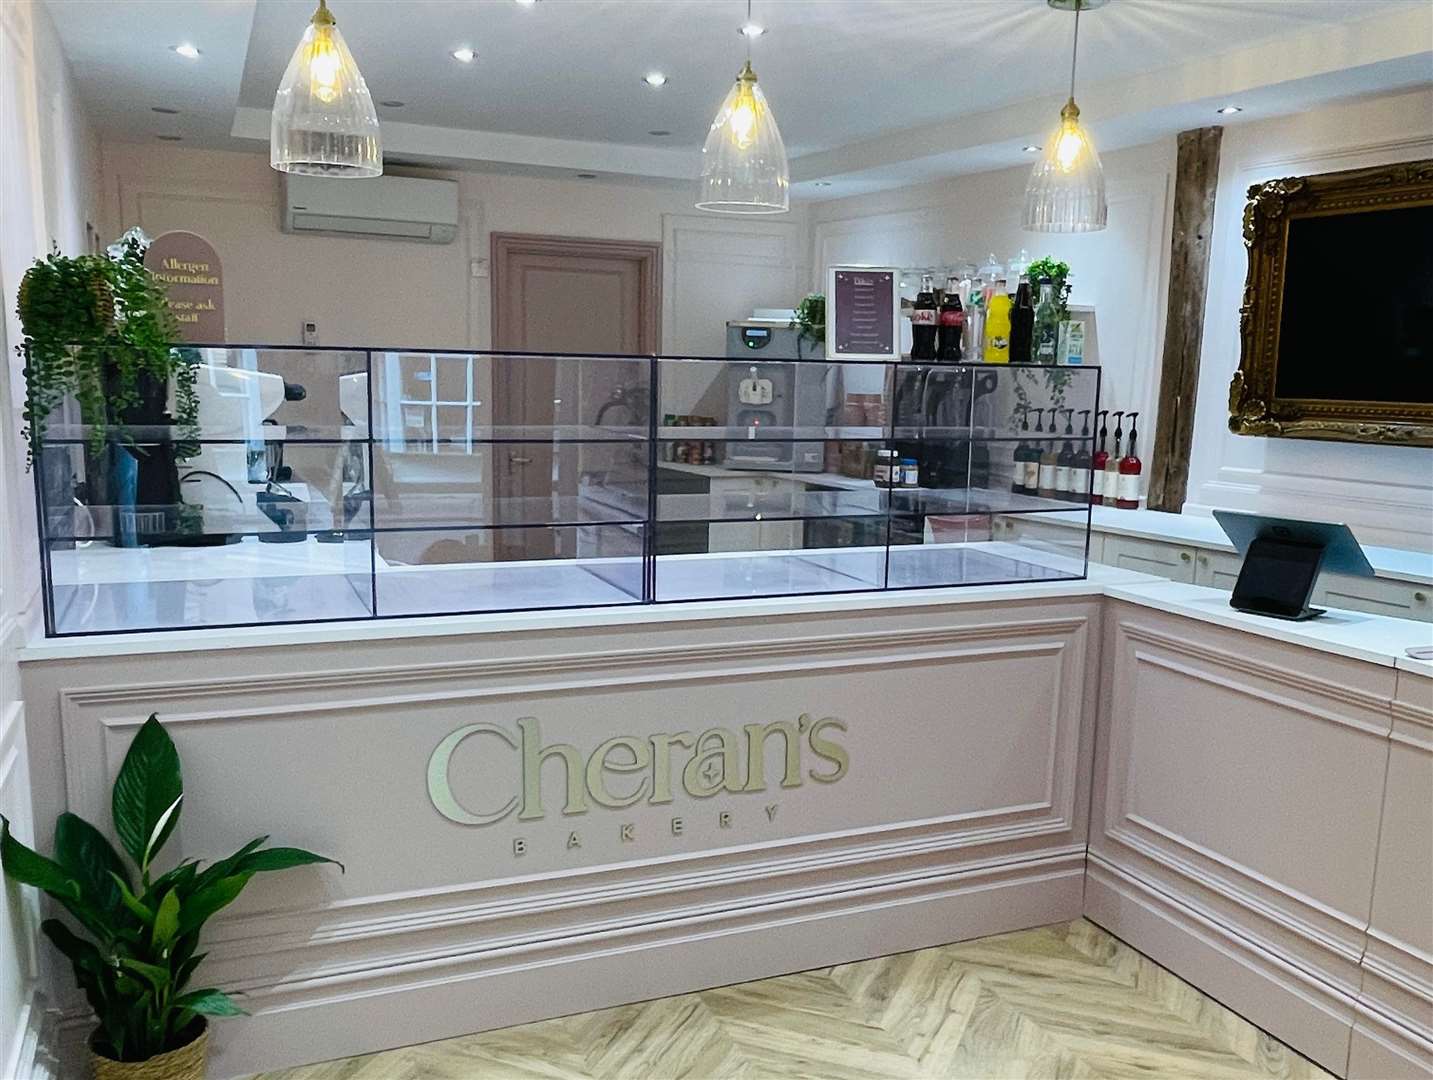 Inside the new Cheran's Bakery in Rochester. Picture: Cheran's Bakery